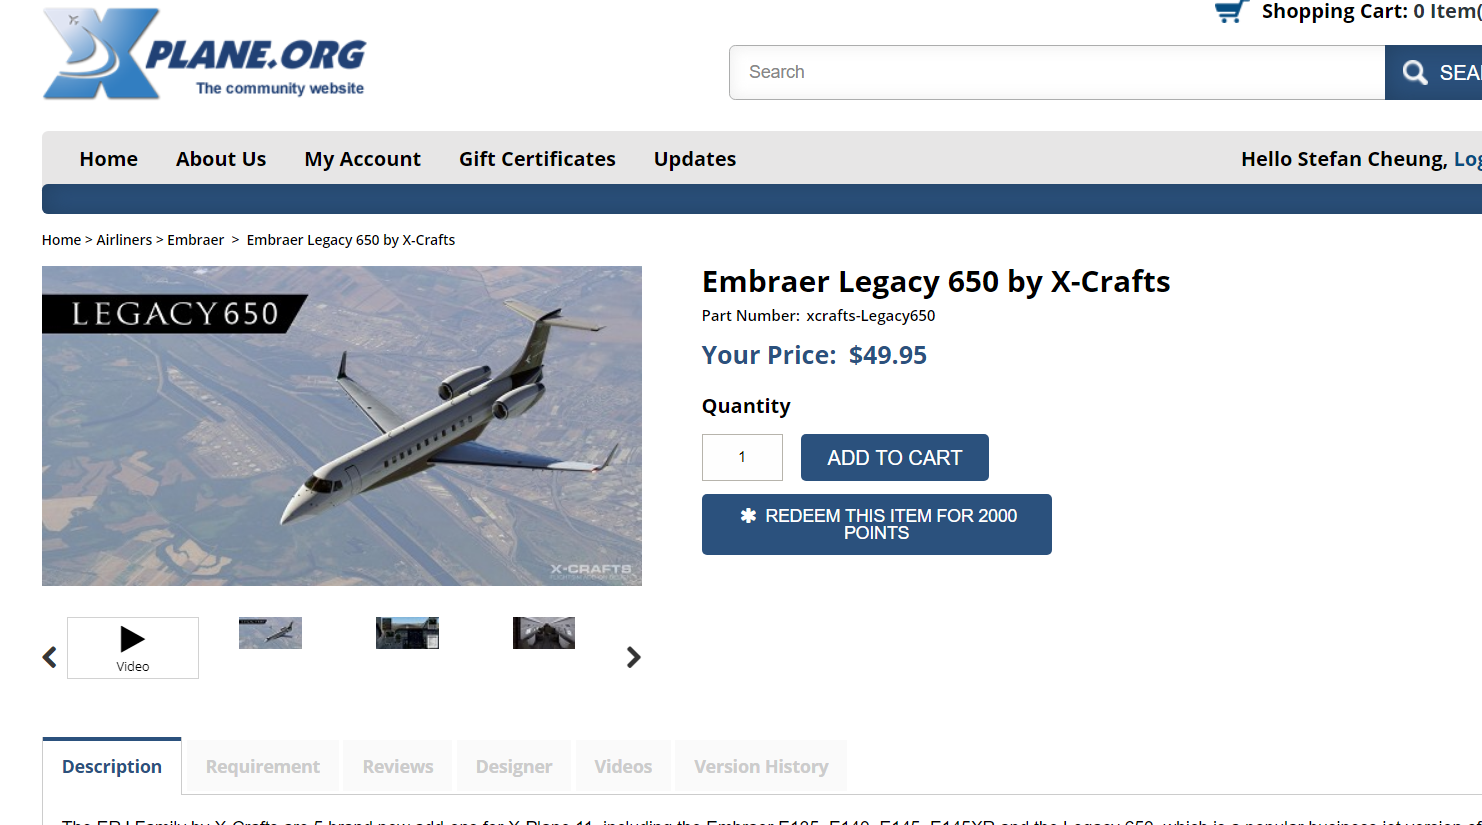 出售 XP11 插件 Embraer Legacy 650 by X-Crafts-8684 